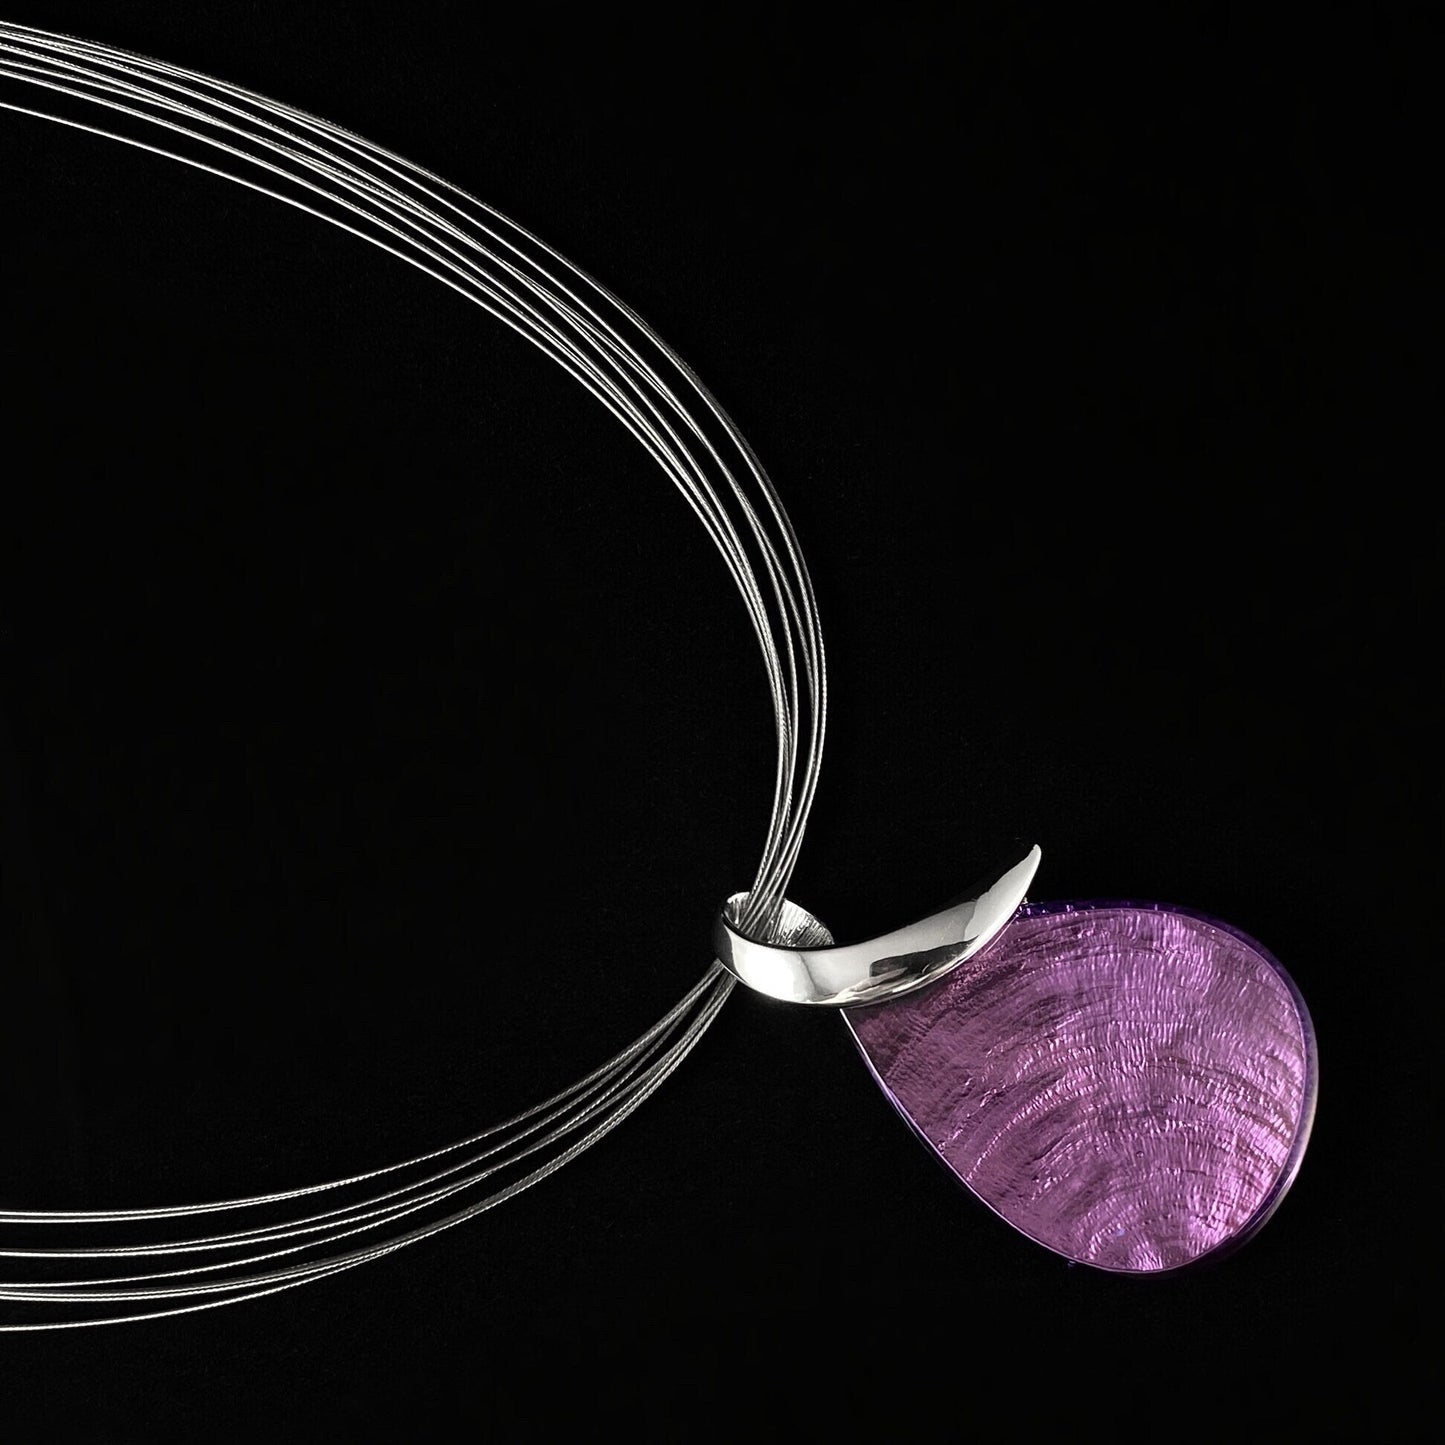 Handmade Resin and Shell Purple Teardrop Pendant Necklace, Hypoallergenic - Origin